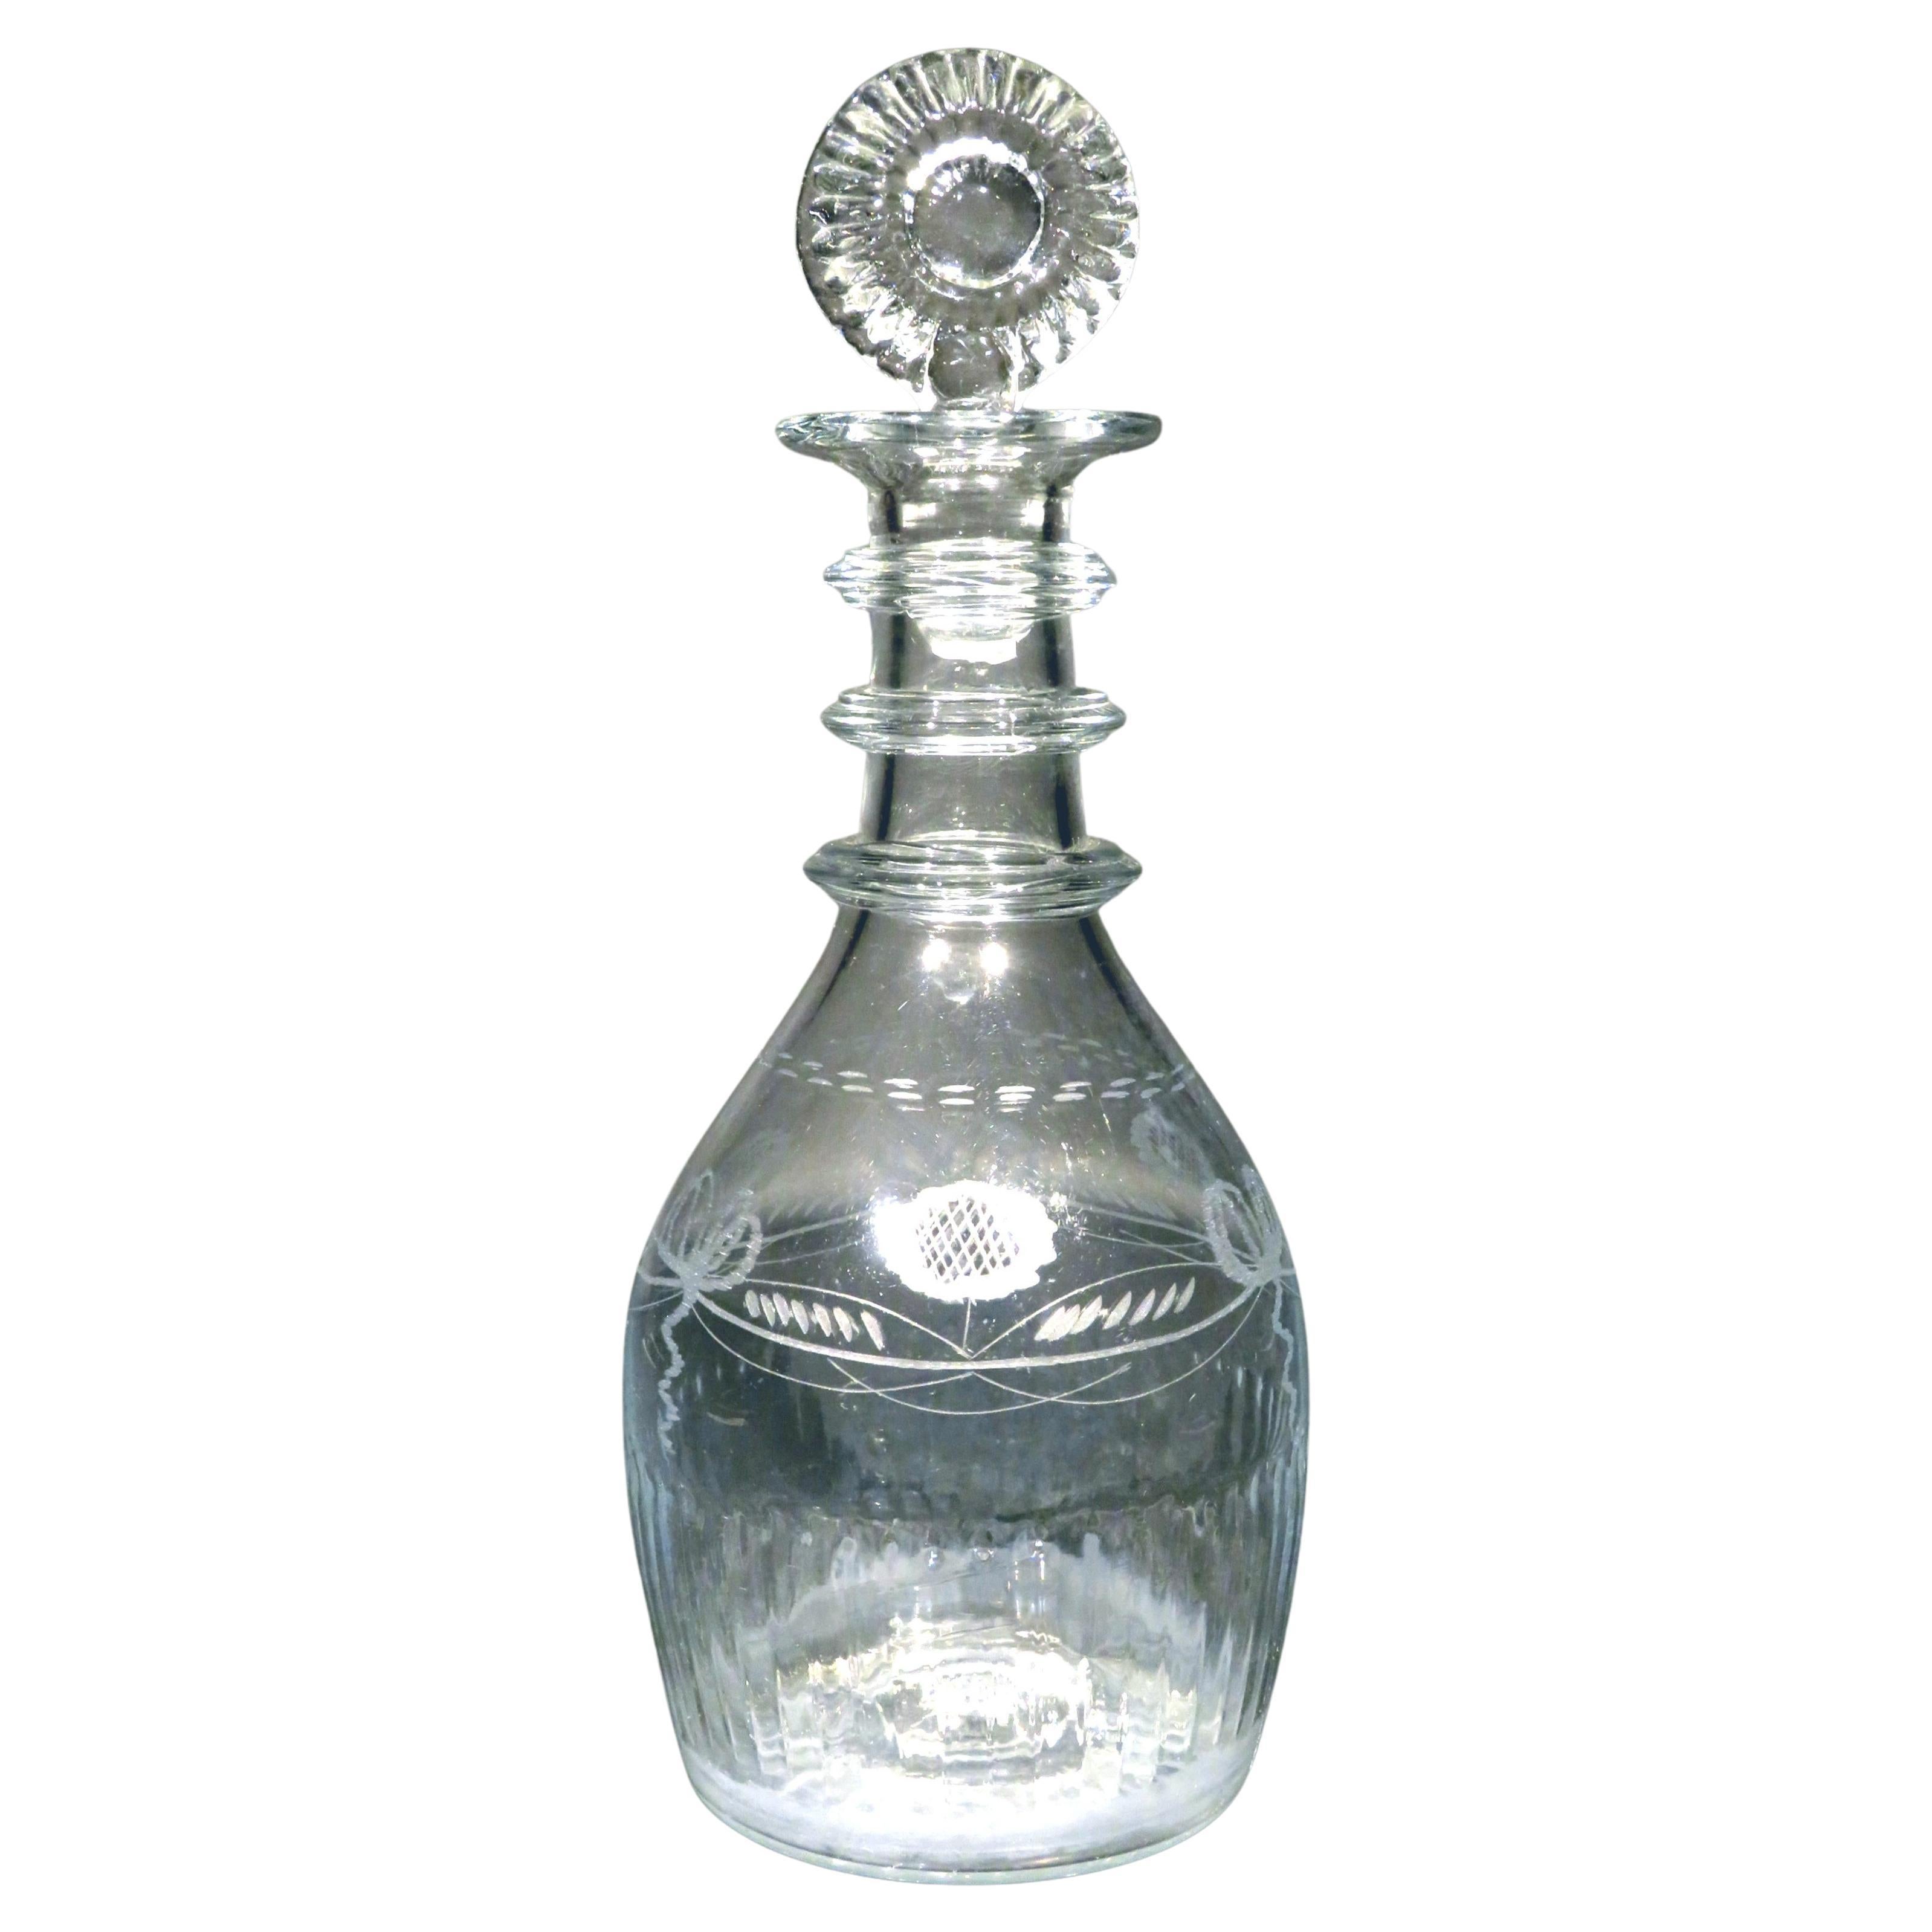 Very Fine & Rare Early 19th Century Waterloo Glass Company Decanter, Ireland